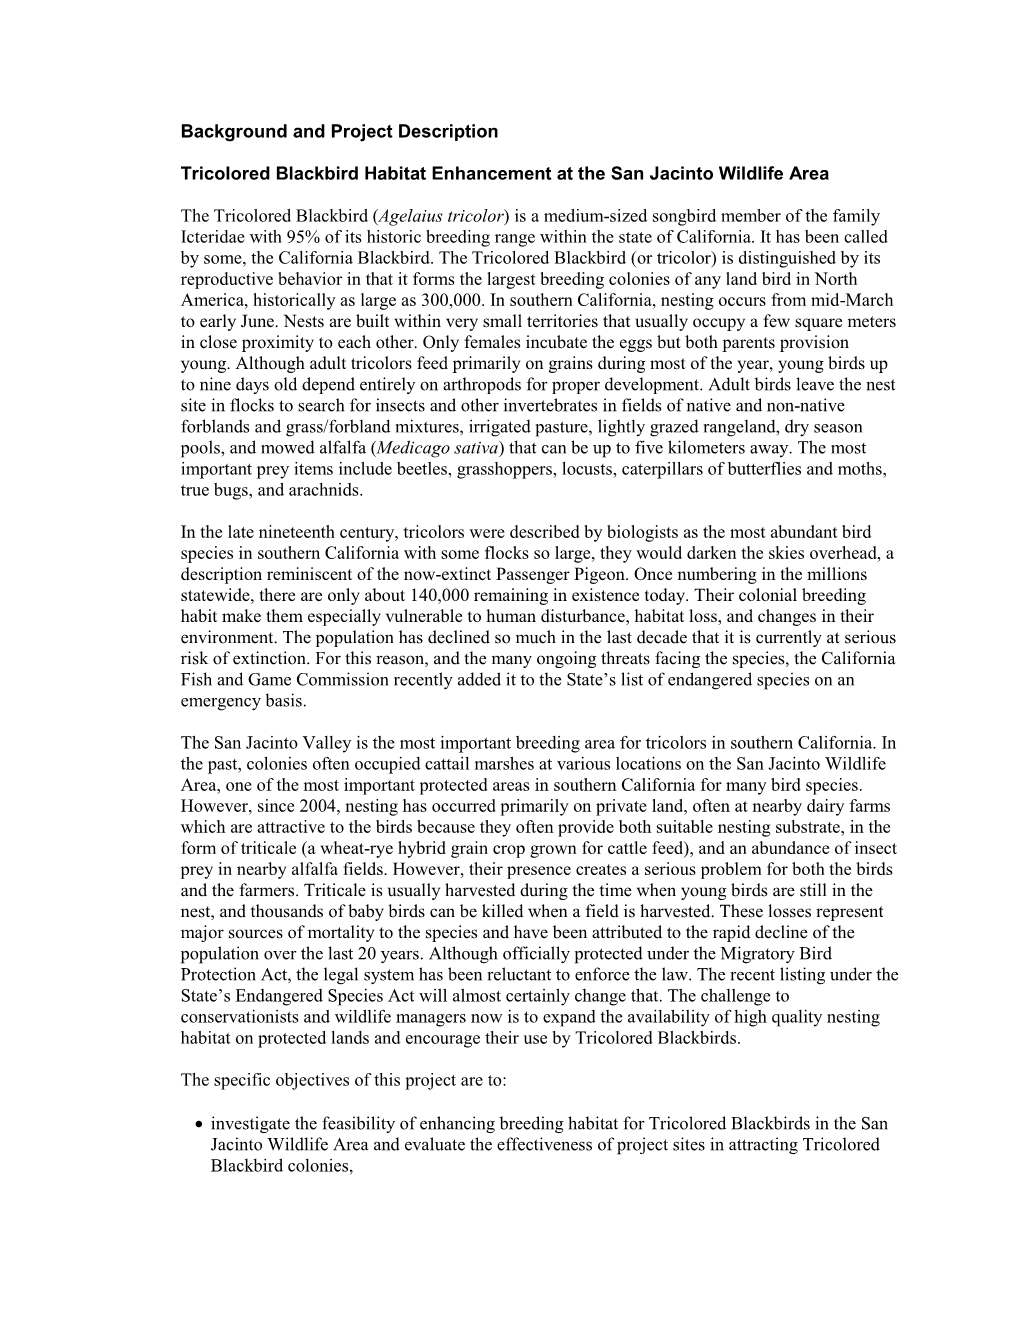 USDA Protection of Tricolor Winged Blackbird Habitat Project Description